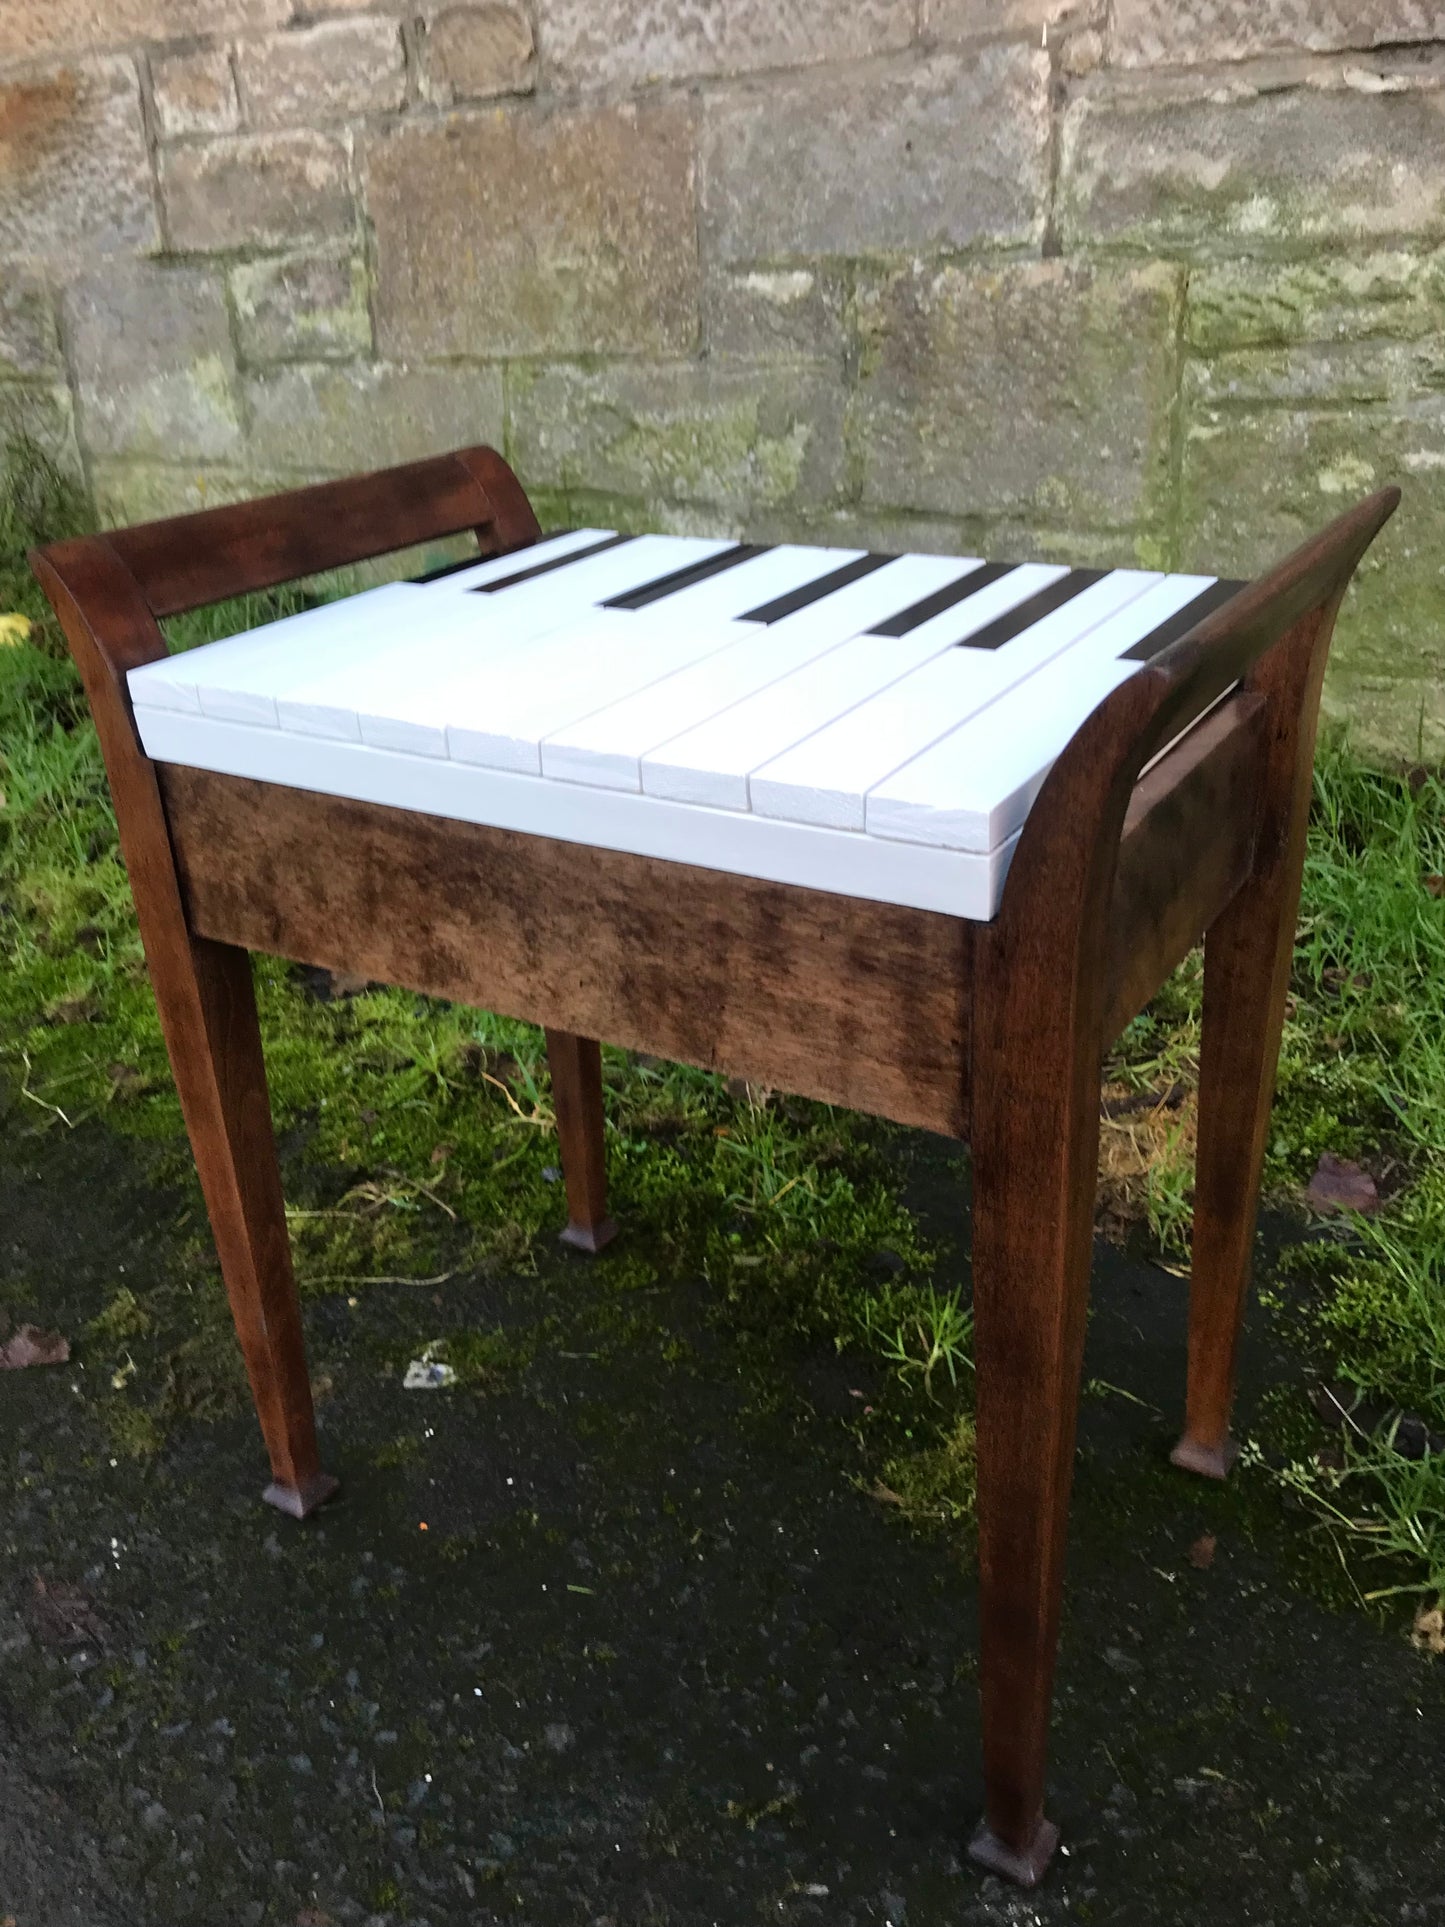 Commission for Vanda - Piano stool